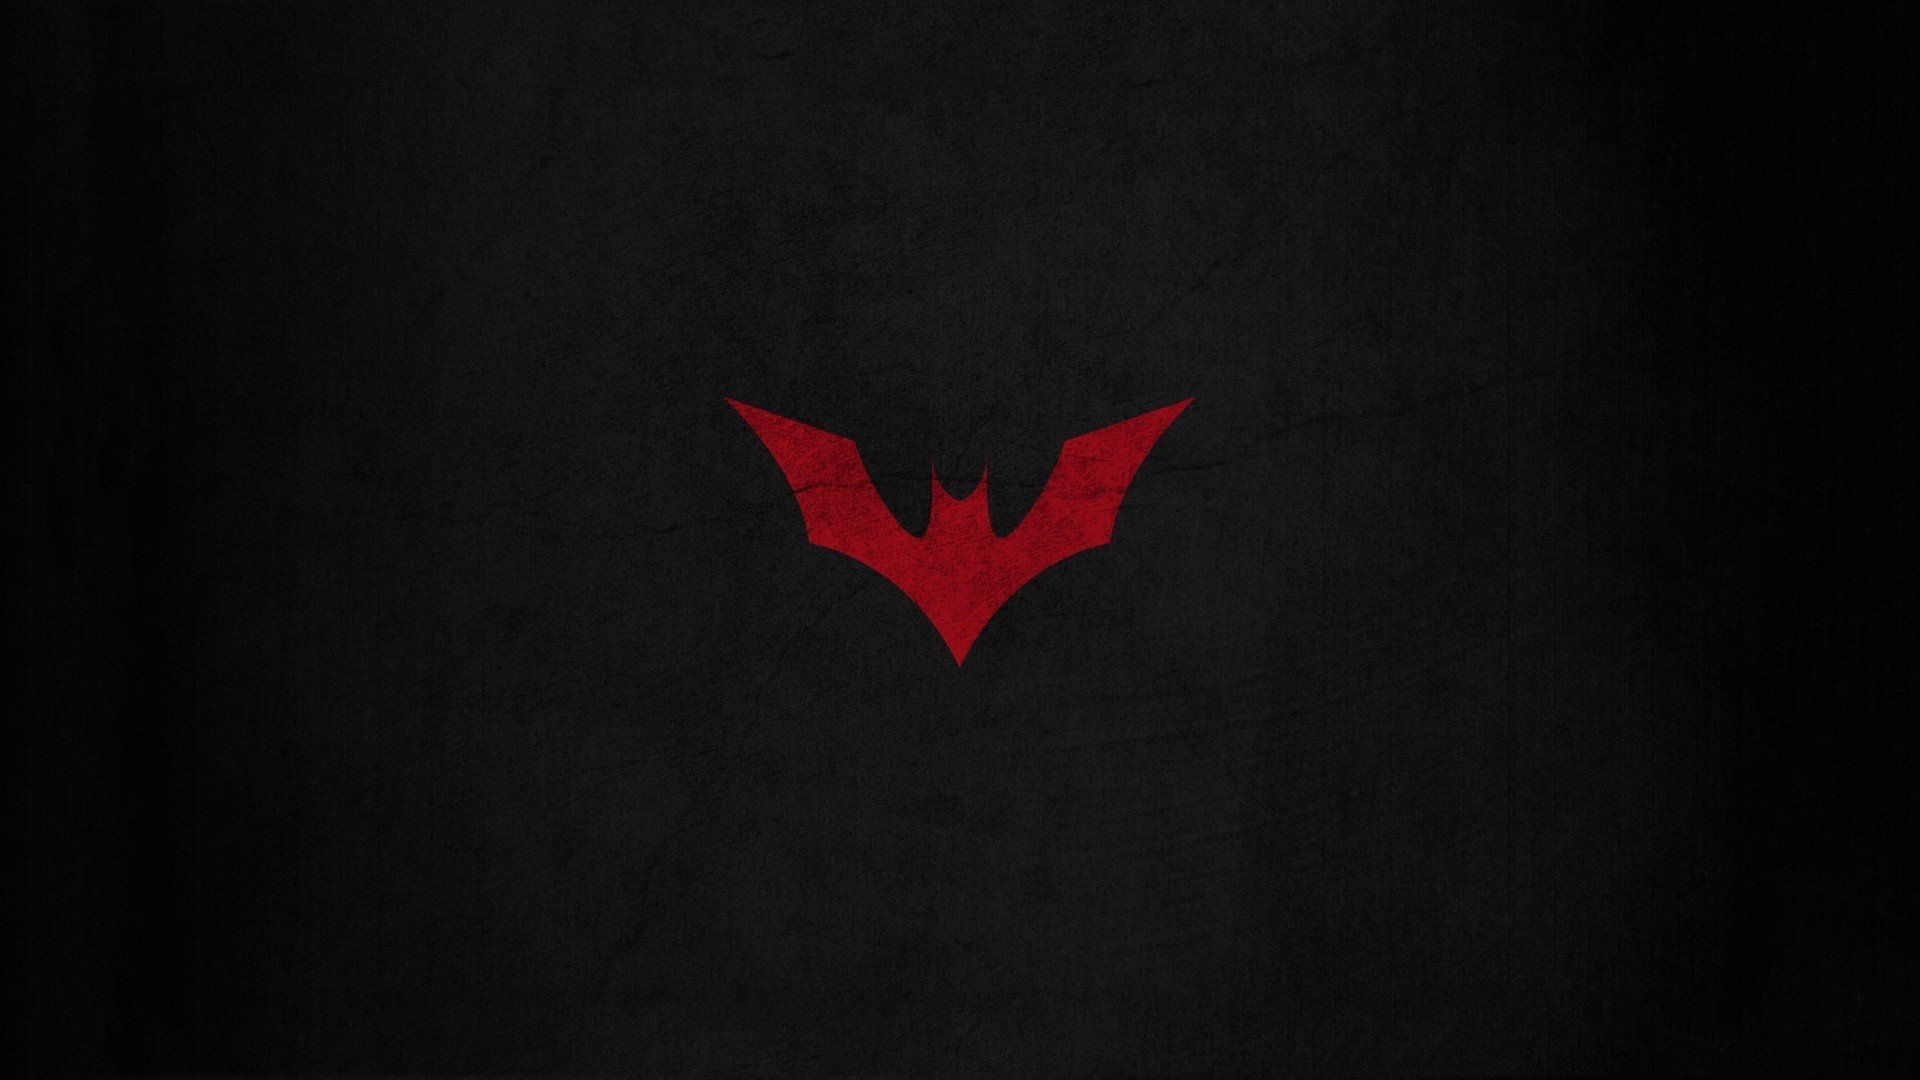 Бэтмен заставка. Обои на рабочий стол темные. Обои на рабочий стол черные. Красные обои на рабочий стол. Бэтмен обои.